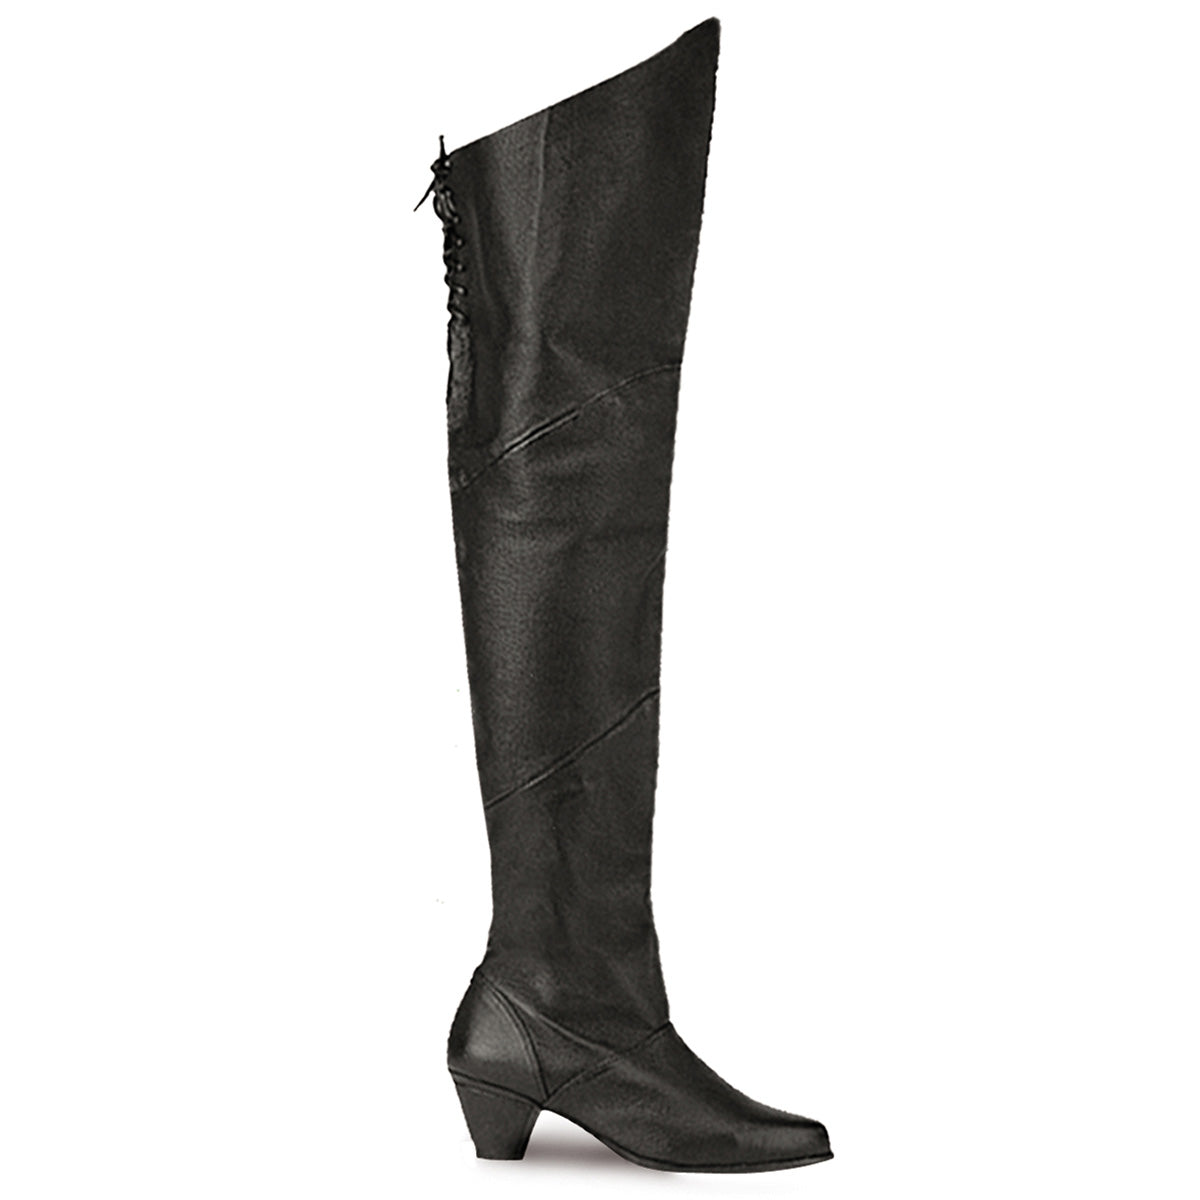 MAIDEN-8828 2.5" Heel Black Leather Women's Boots Funtasma Costume Shoes